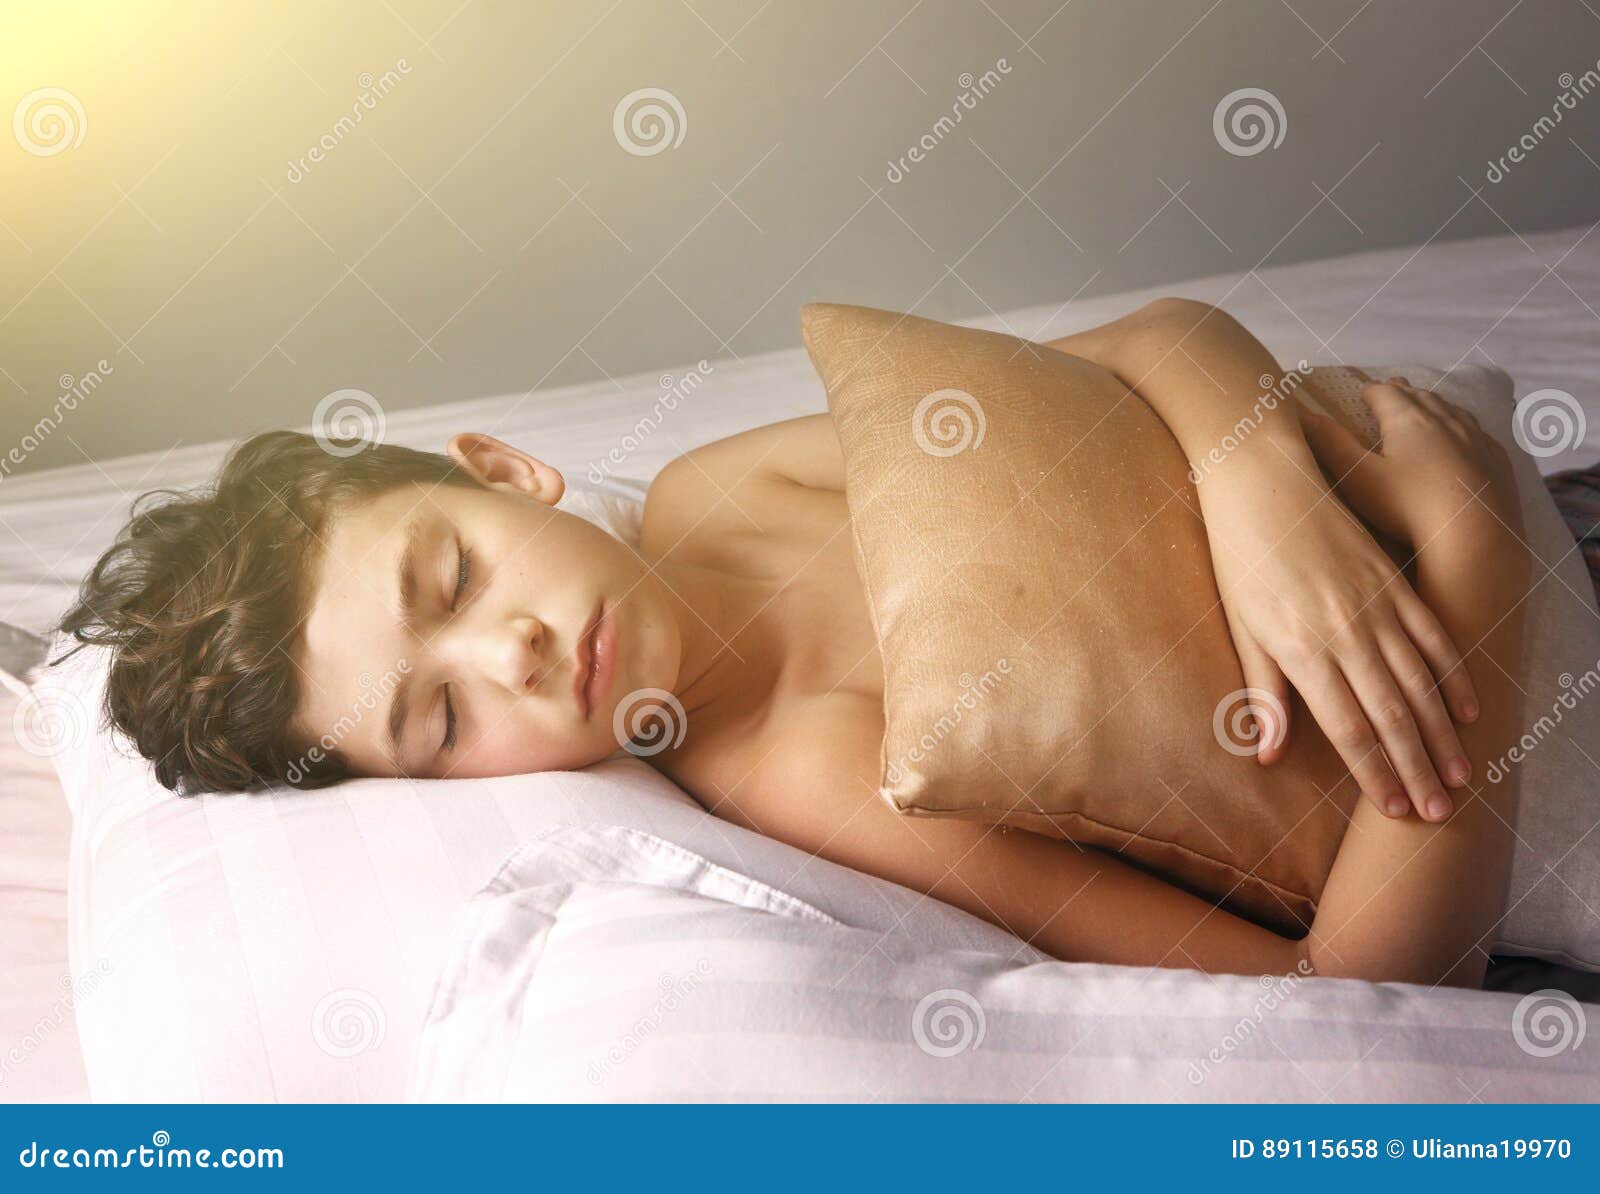 Teen Male To Sleep 15